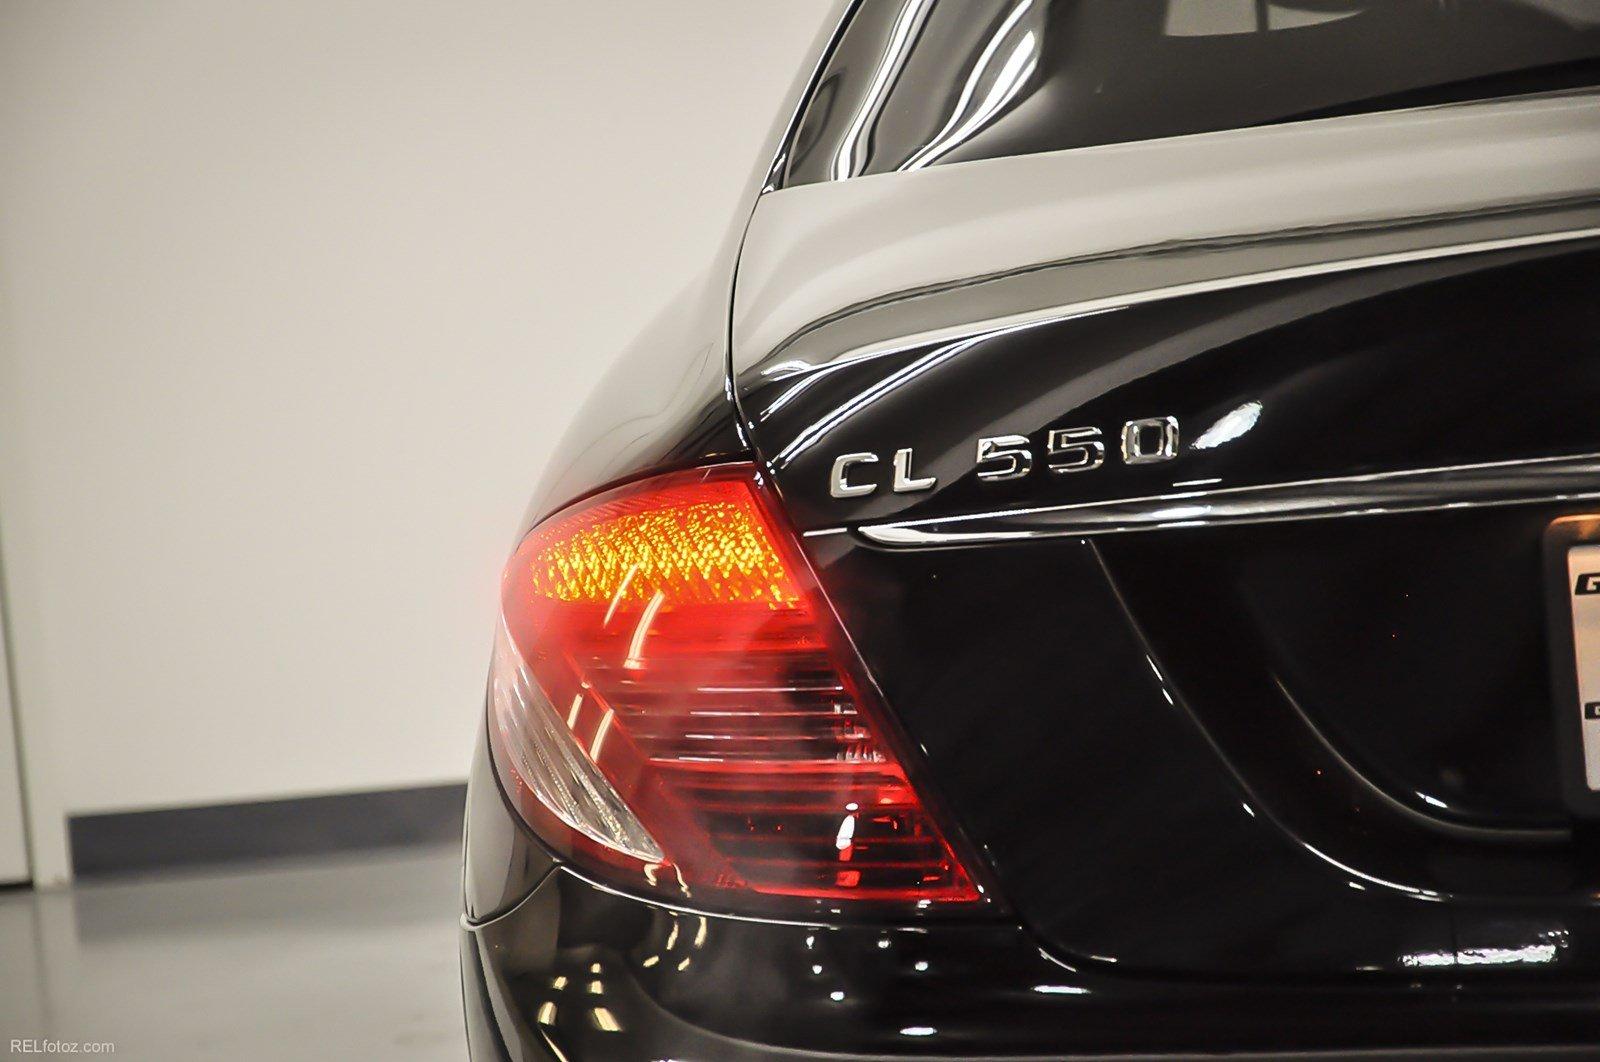 Used 2010 Mercedes-Benz CL-Class CL 550 for sale Sold at Gravity Autos Marietta in Marietta GA 30060 6